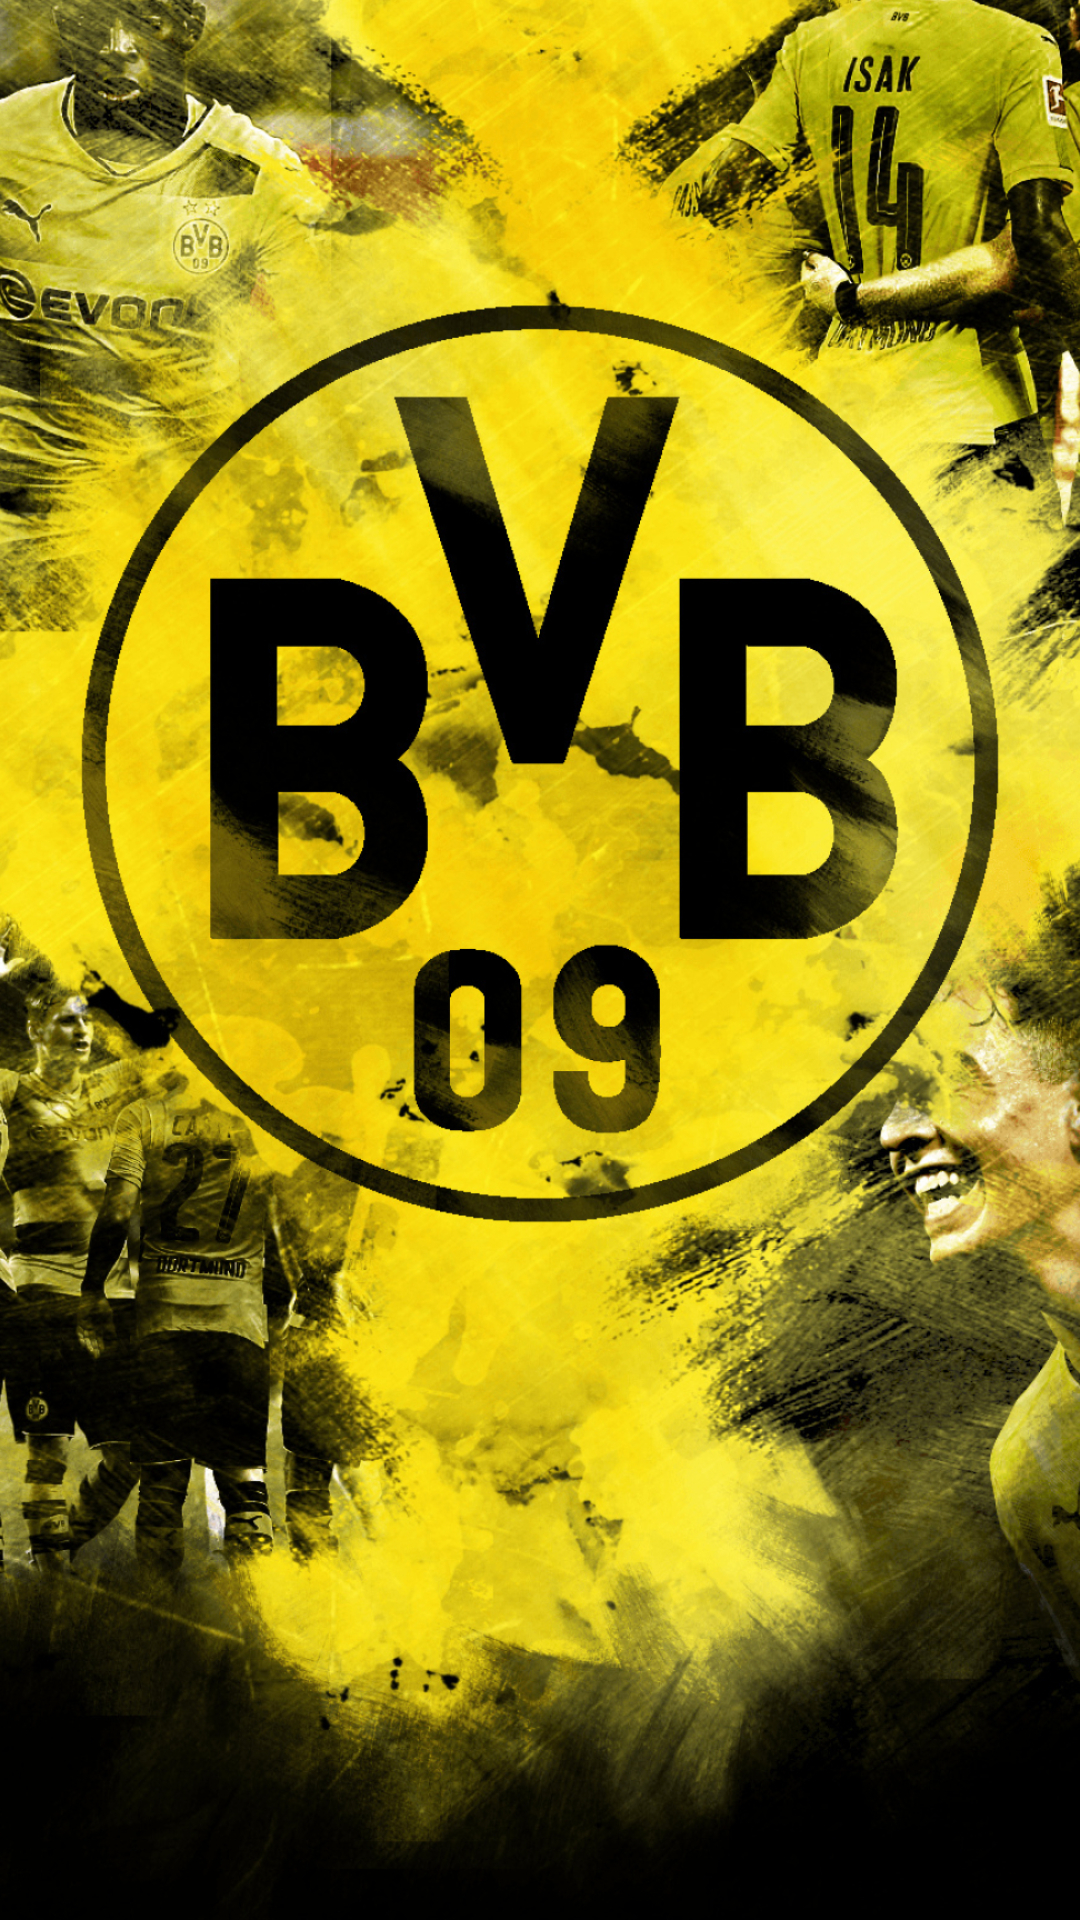 Borussia Dortmund: The 12th richest football team in the world. 1080x1920 Full HD Wallpaper.